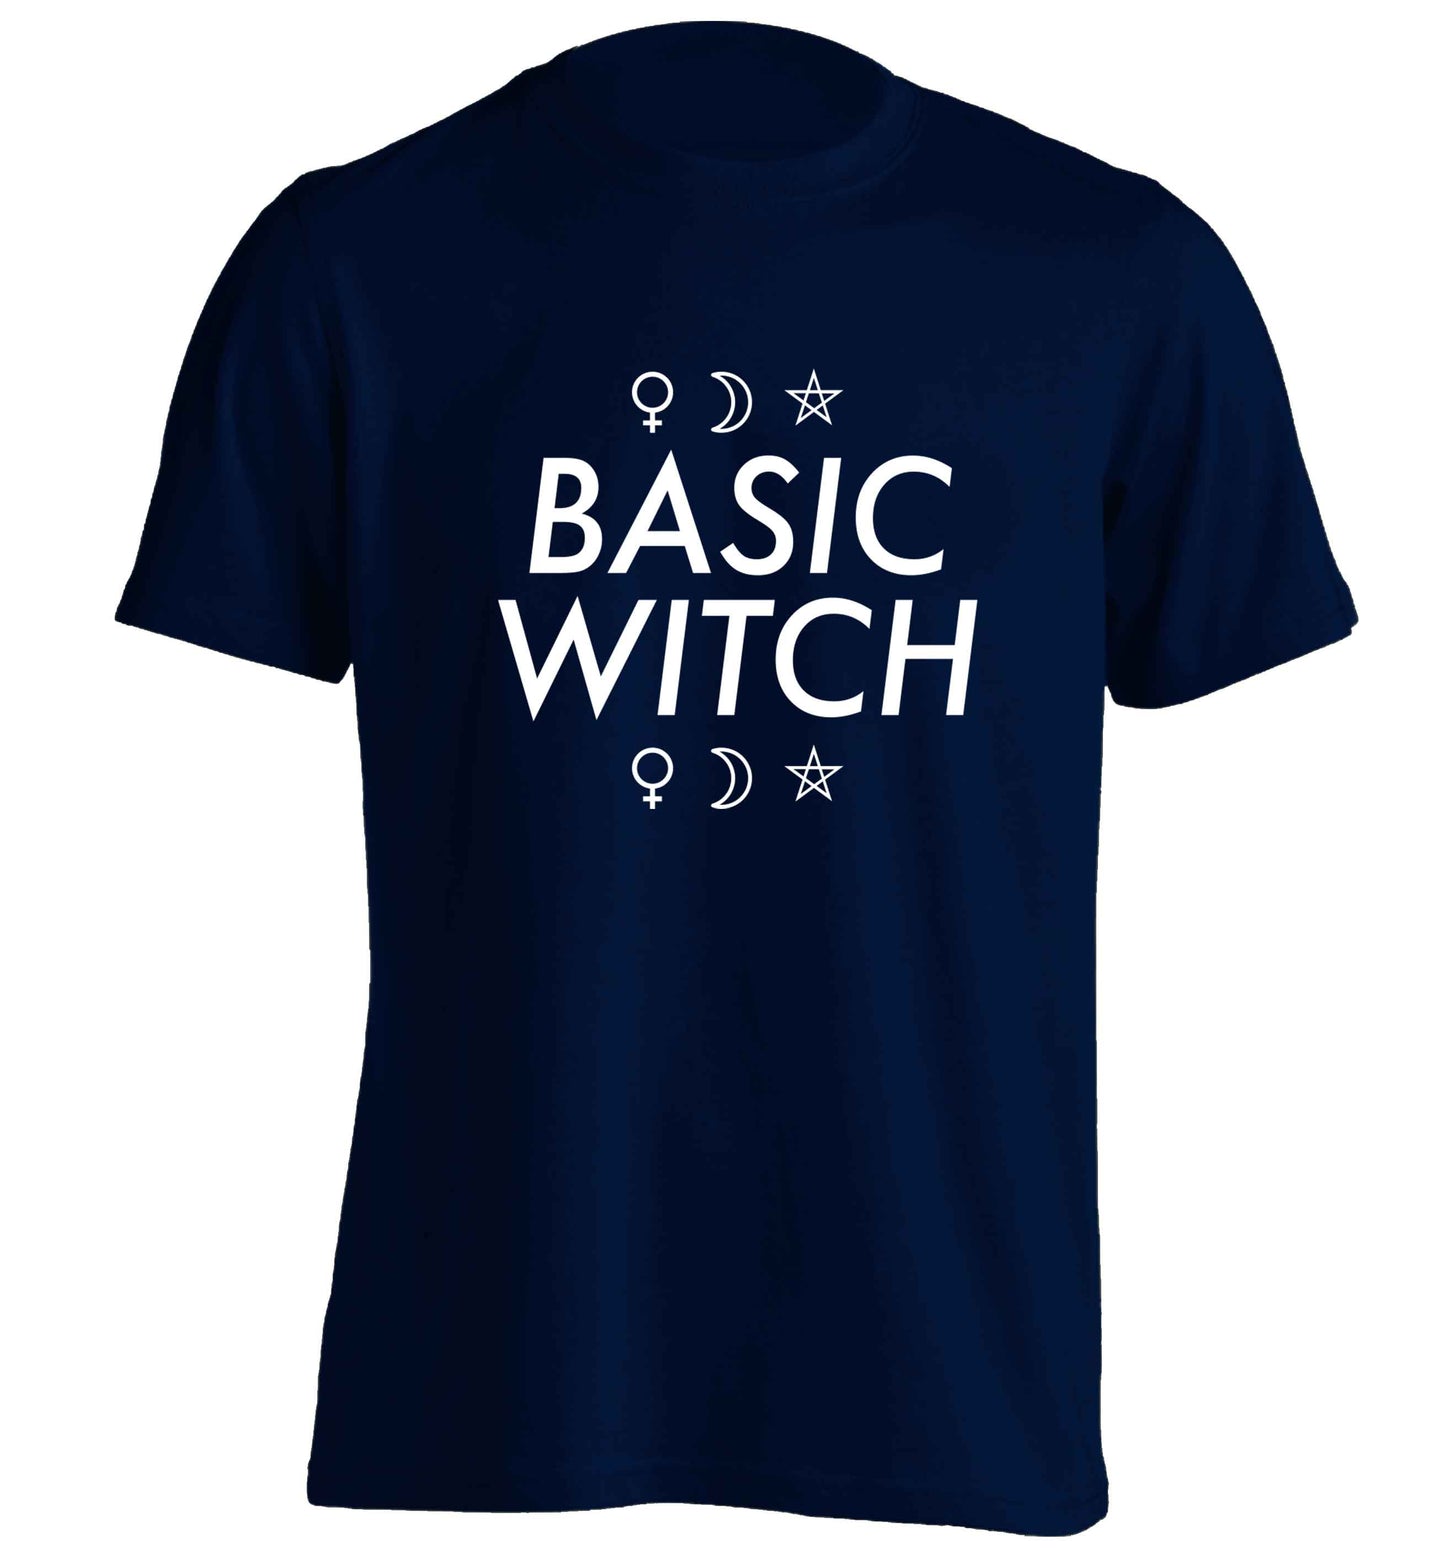 Basic witch 1 adults unisex navy Tshirt 2XL